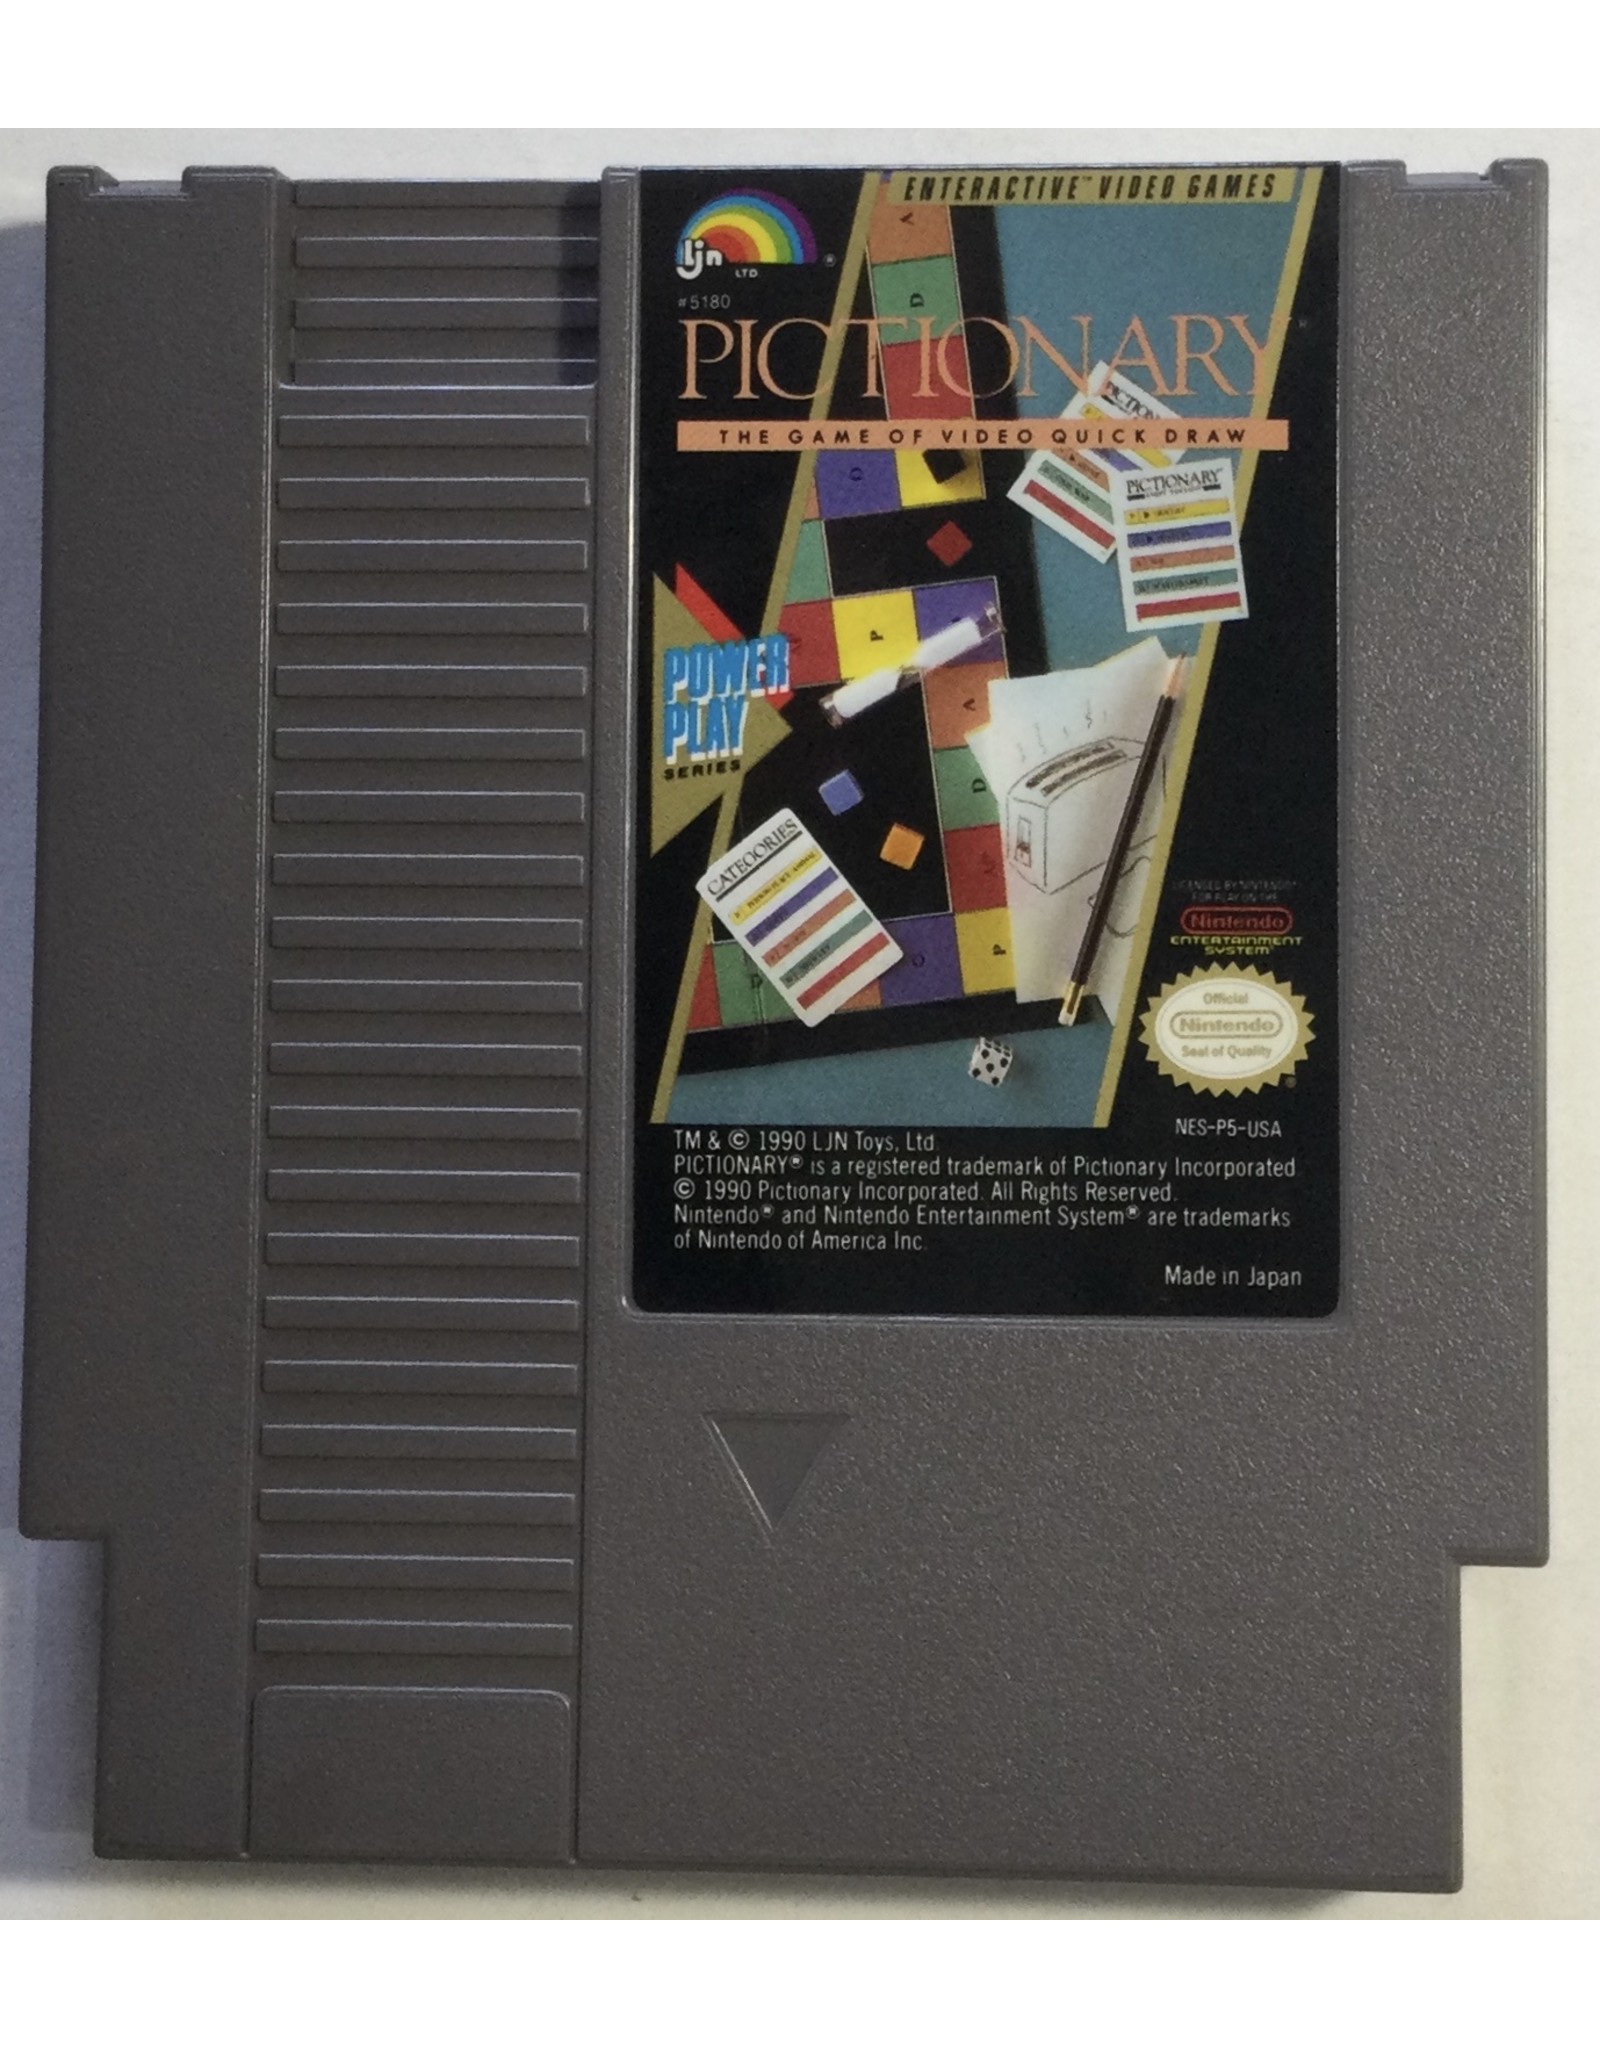 LJN Pictionary for Nintendo Entertainment System (NES) - CIB